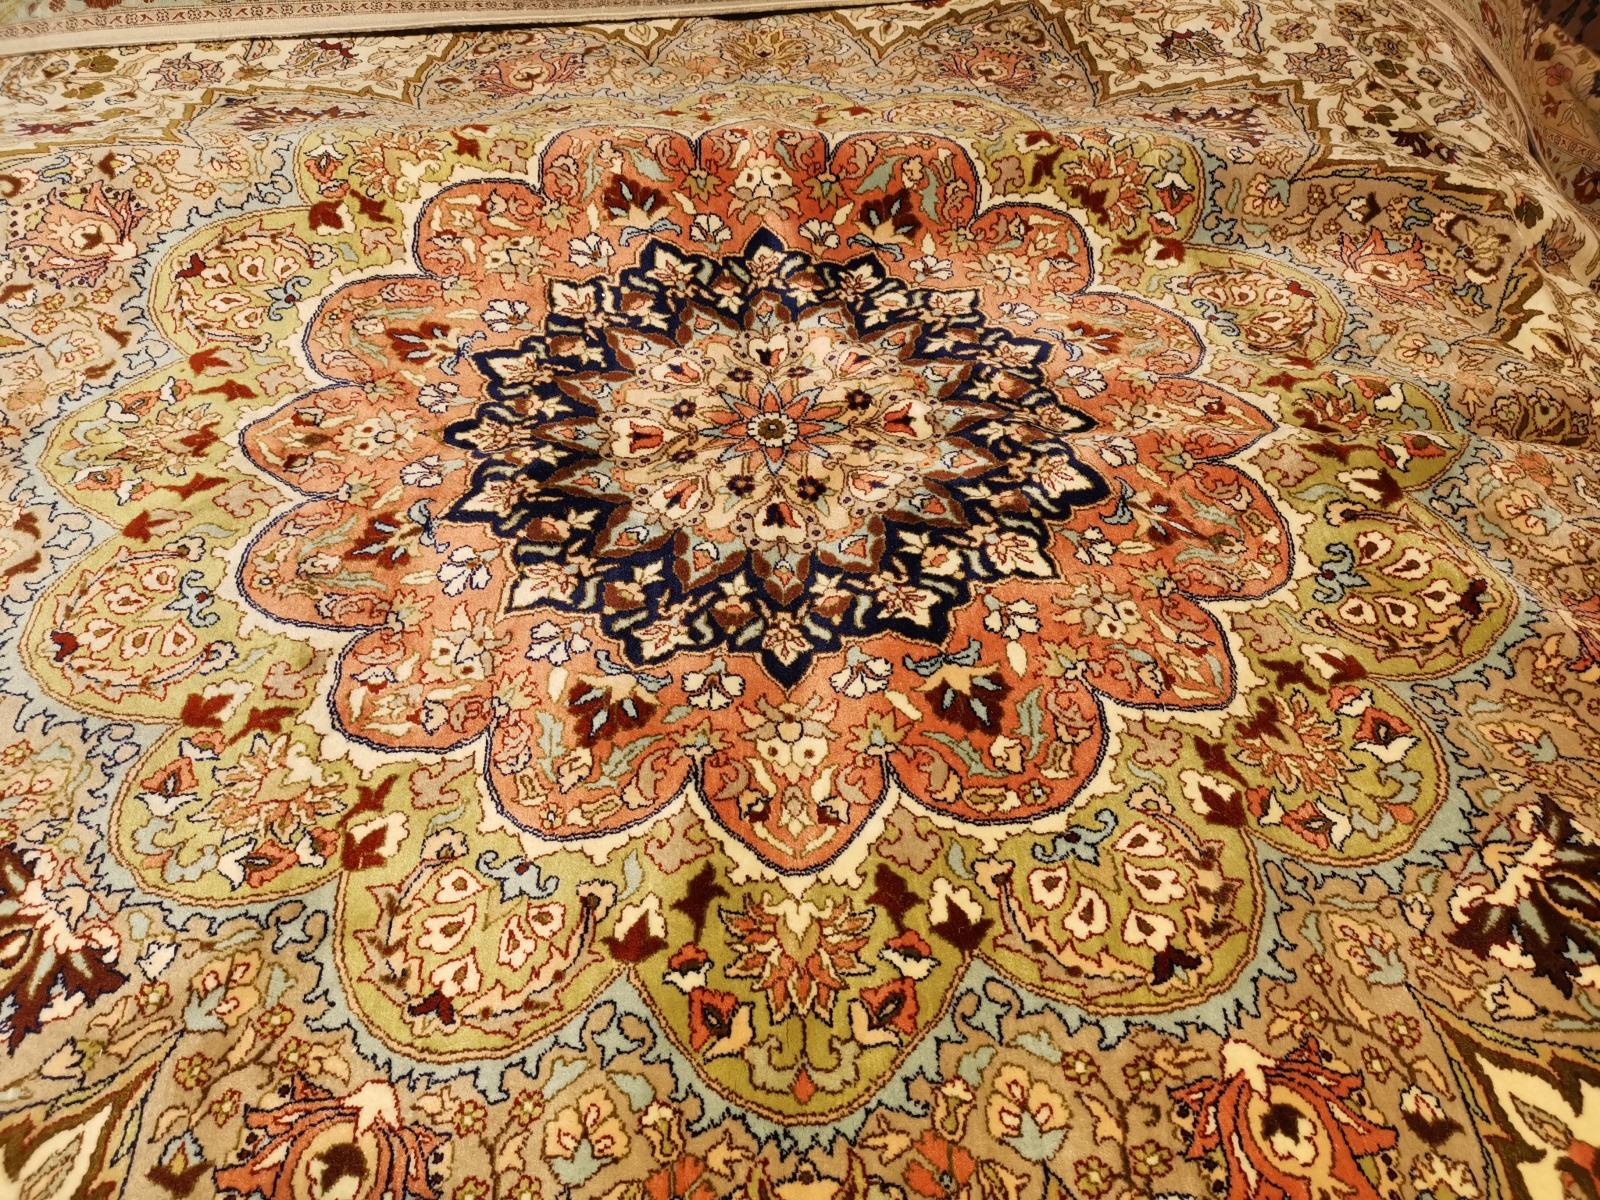 Hand-Knotted Fine Rug Vintage Turkish Hereke Carpet Oversize 17 x 11 ft hand knotted rug For Sale